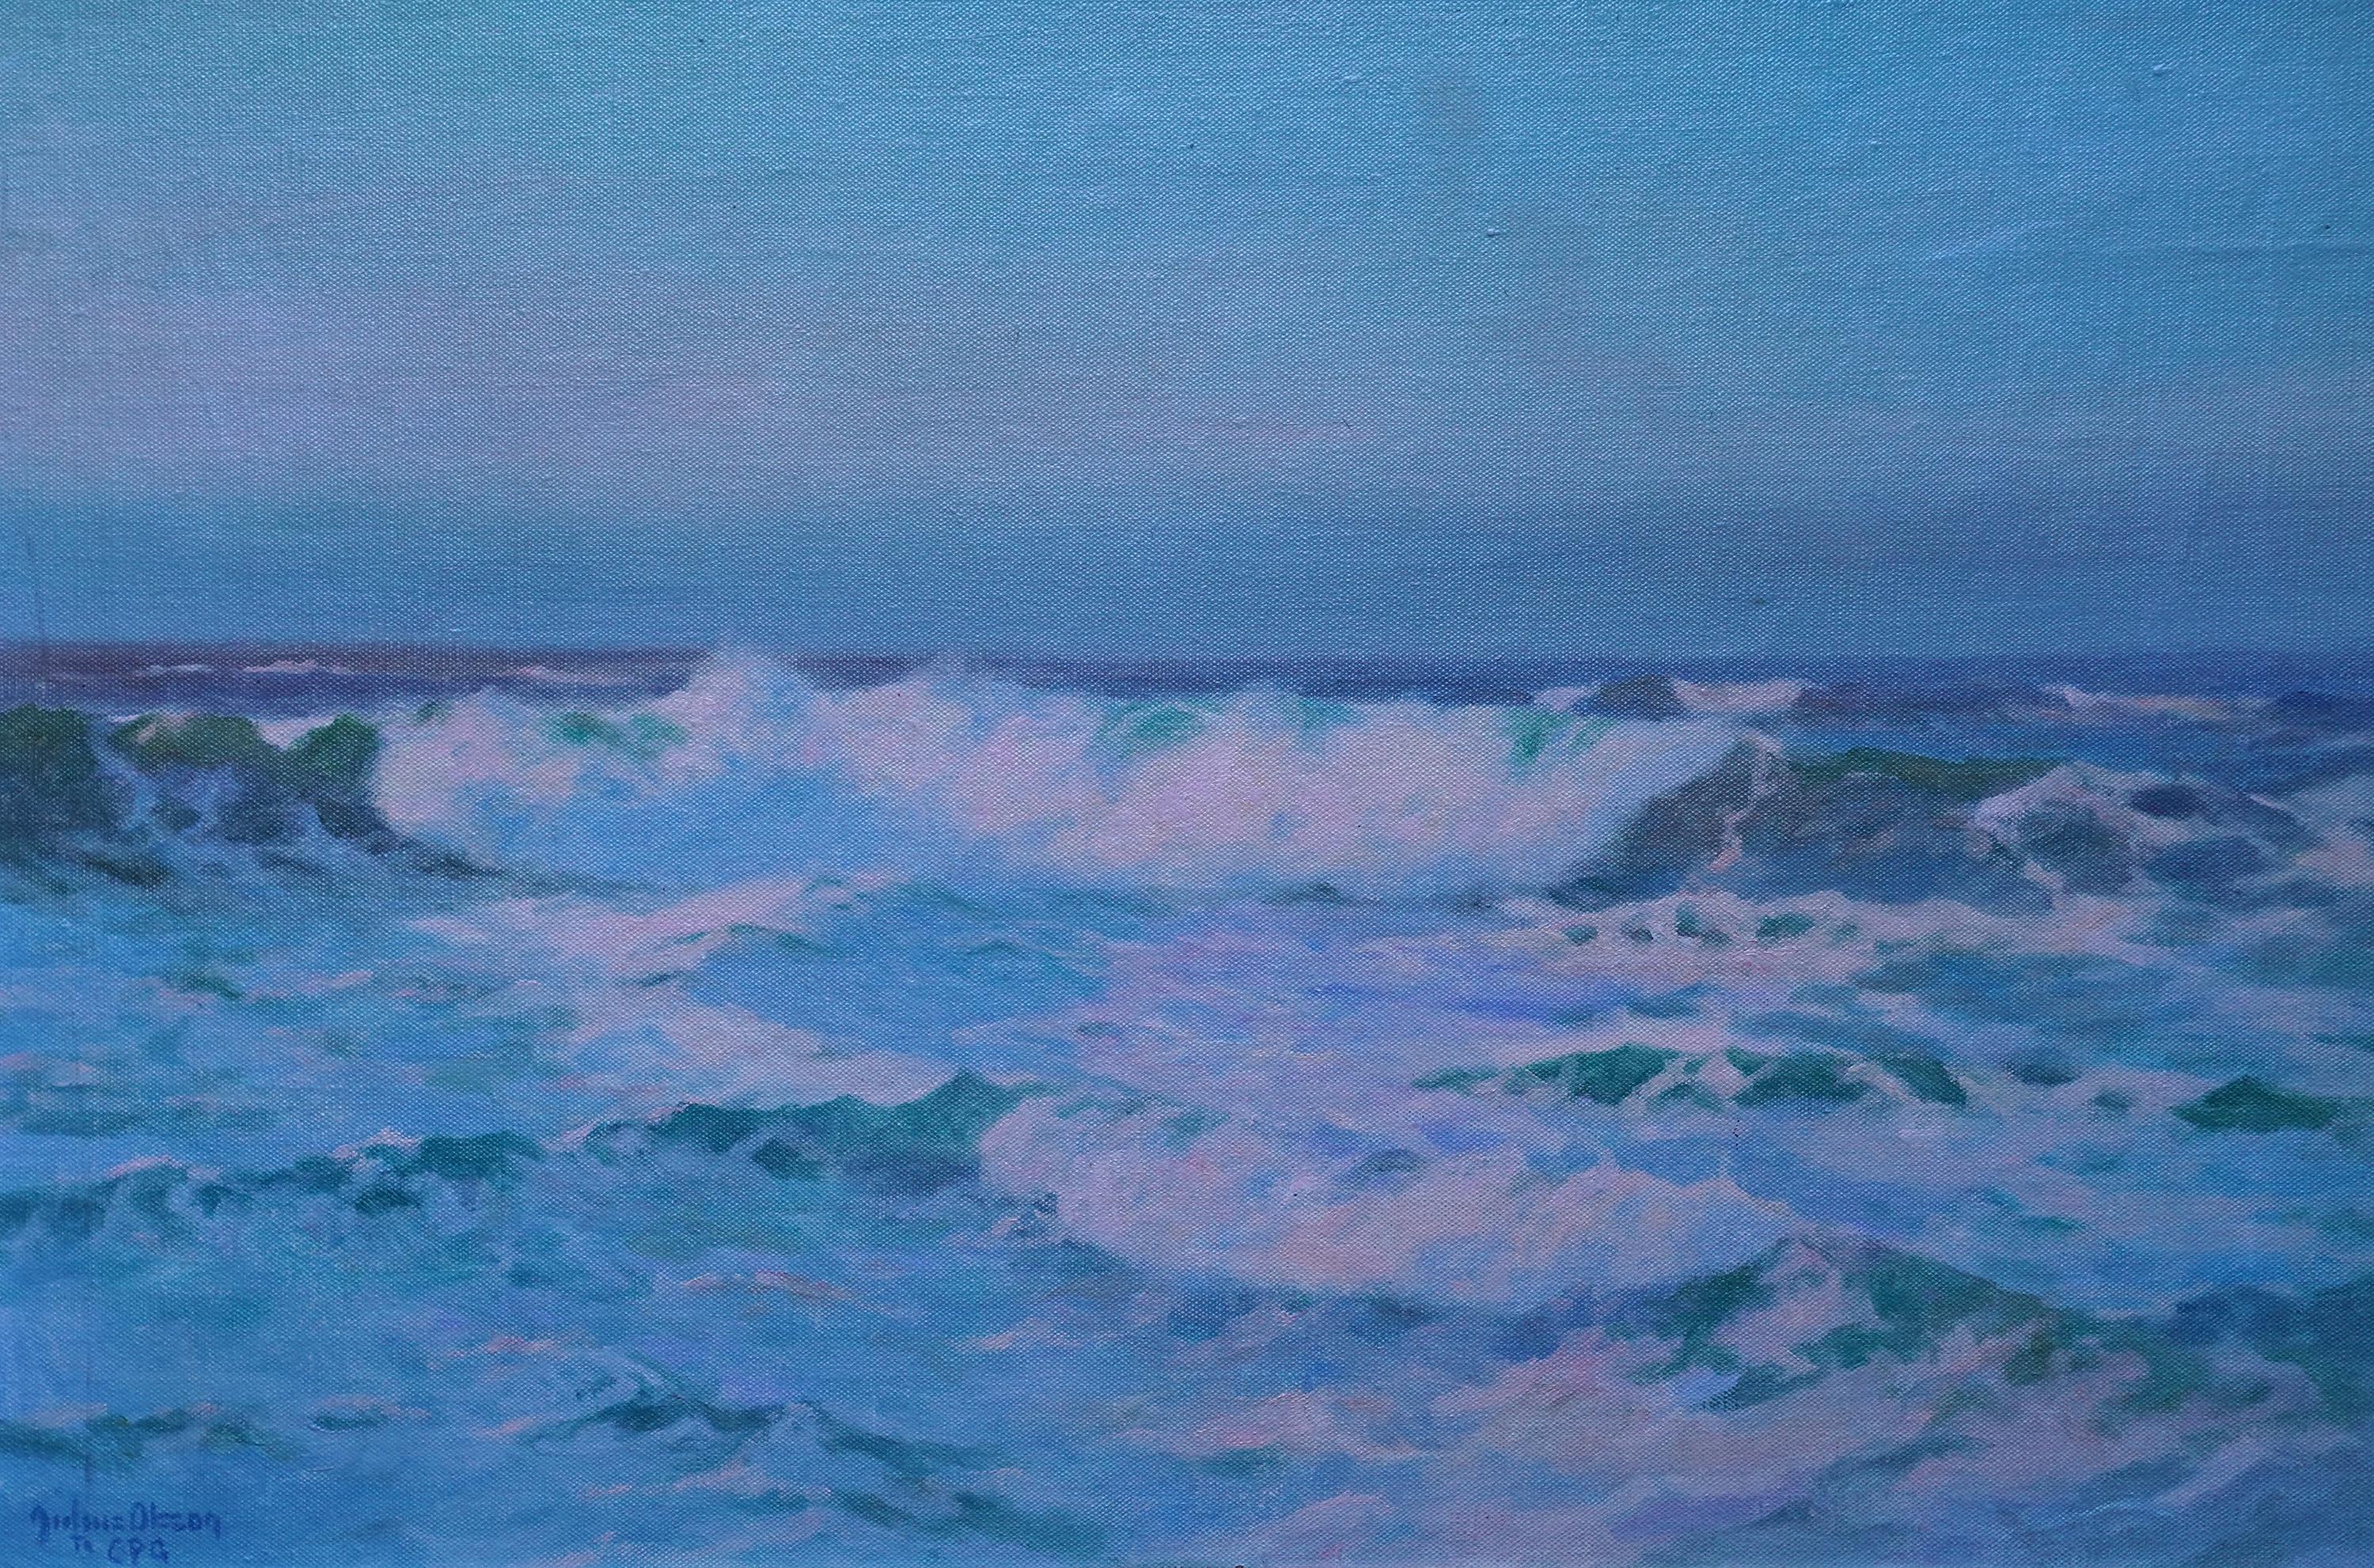 Sunlit Surf - Cornish Seascape - British Newlyn School art marine oil painting - Painting by Julius Olsson 